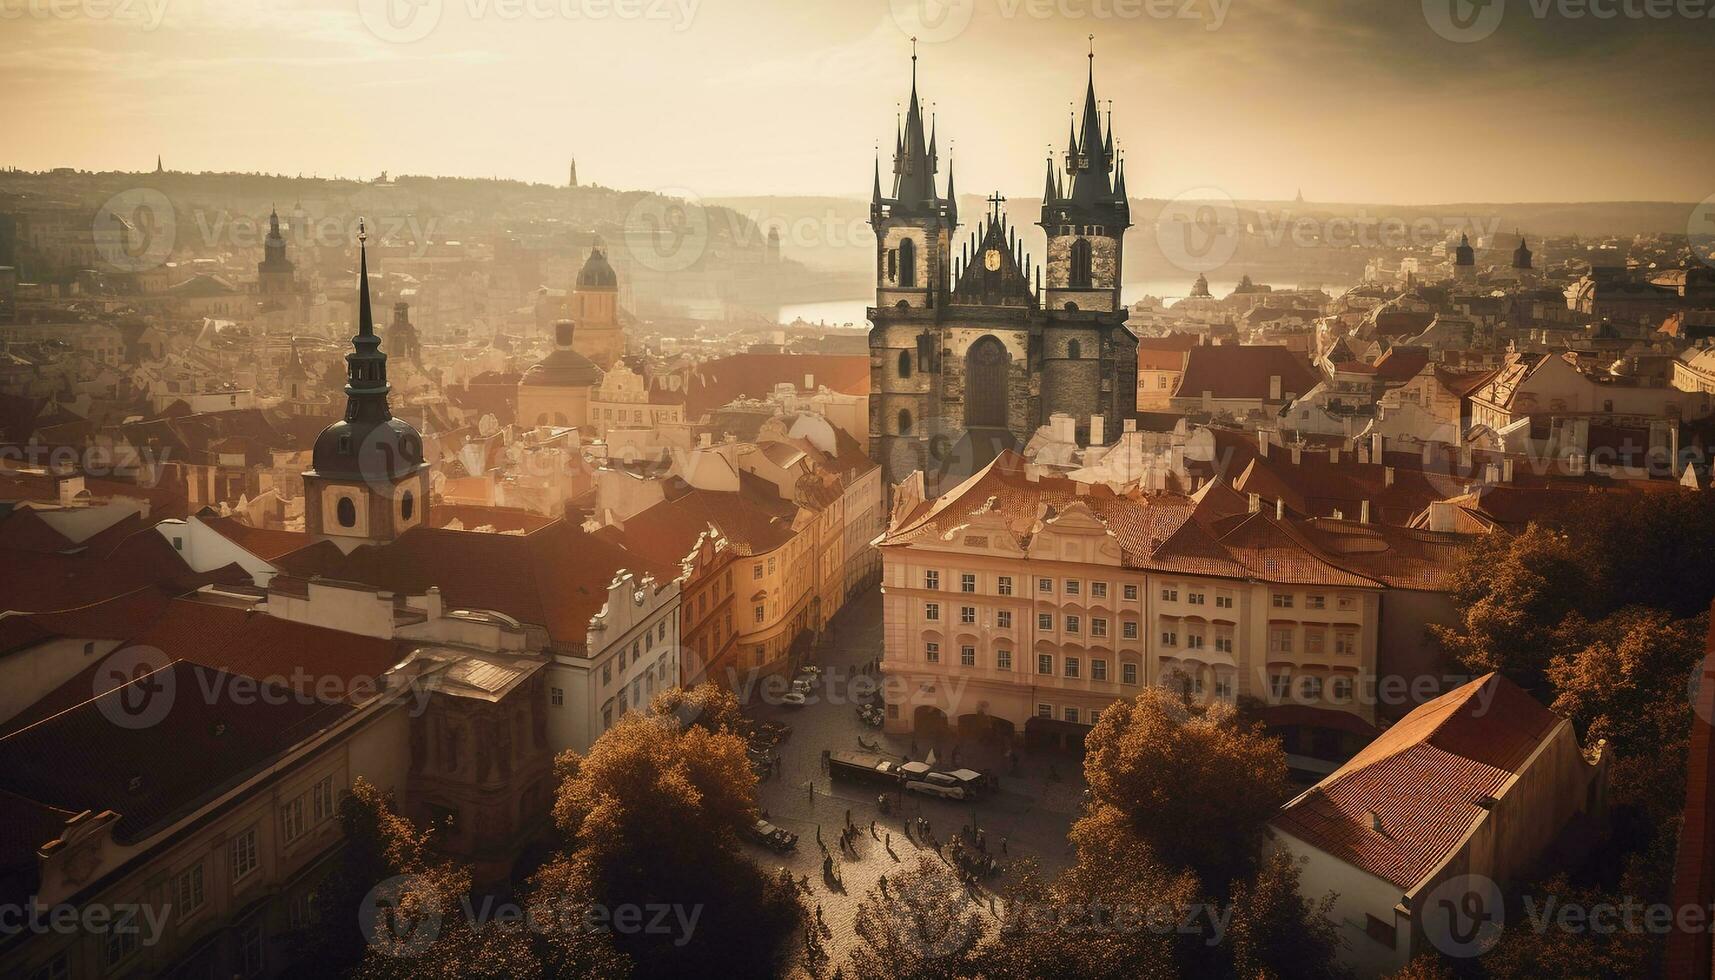 Catholic spires pierce Prague medieval skyline at dusk generated by AI photo